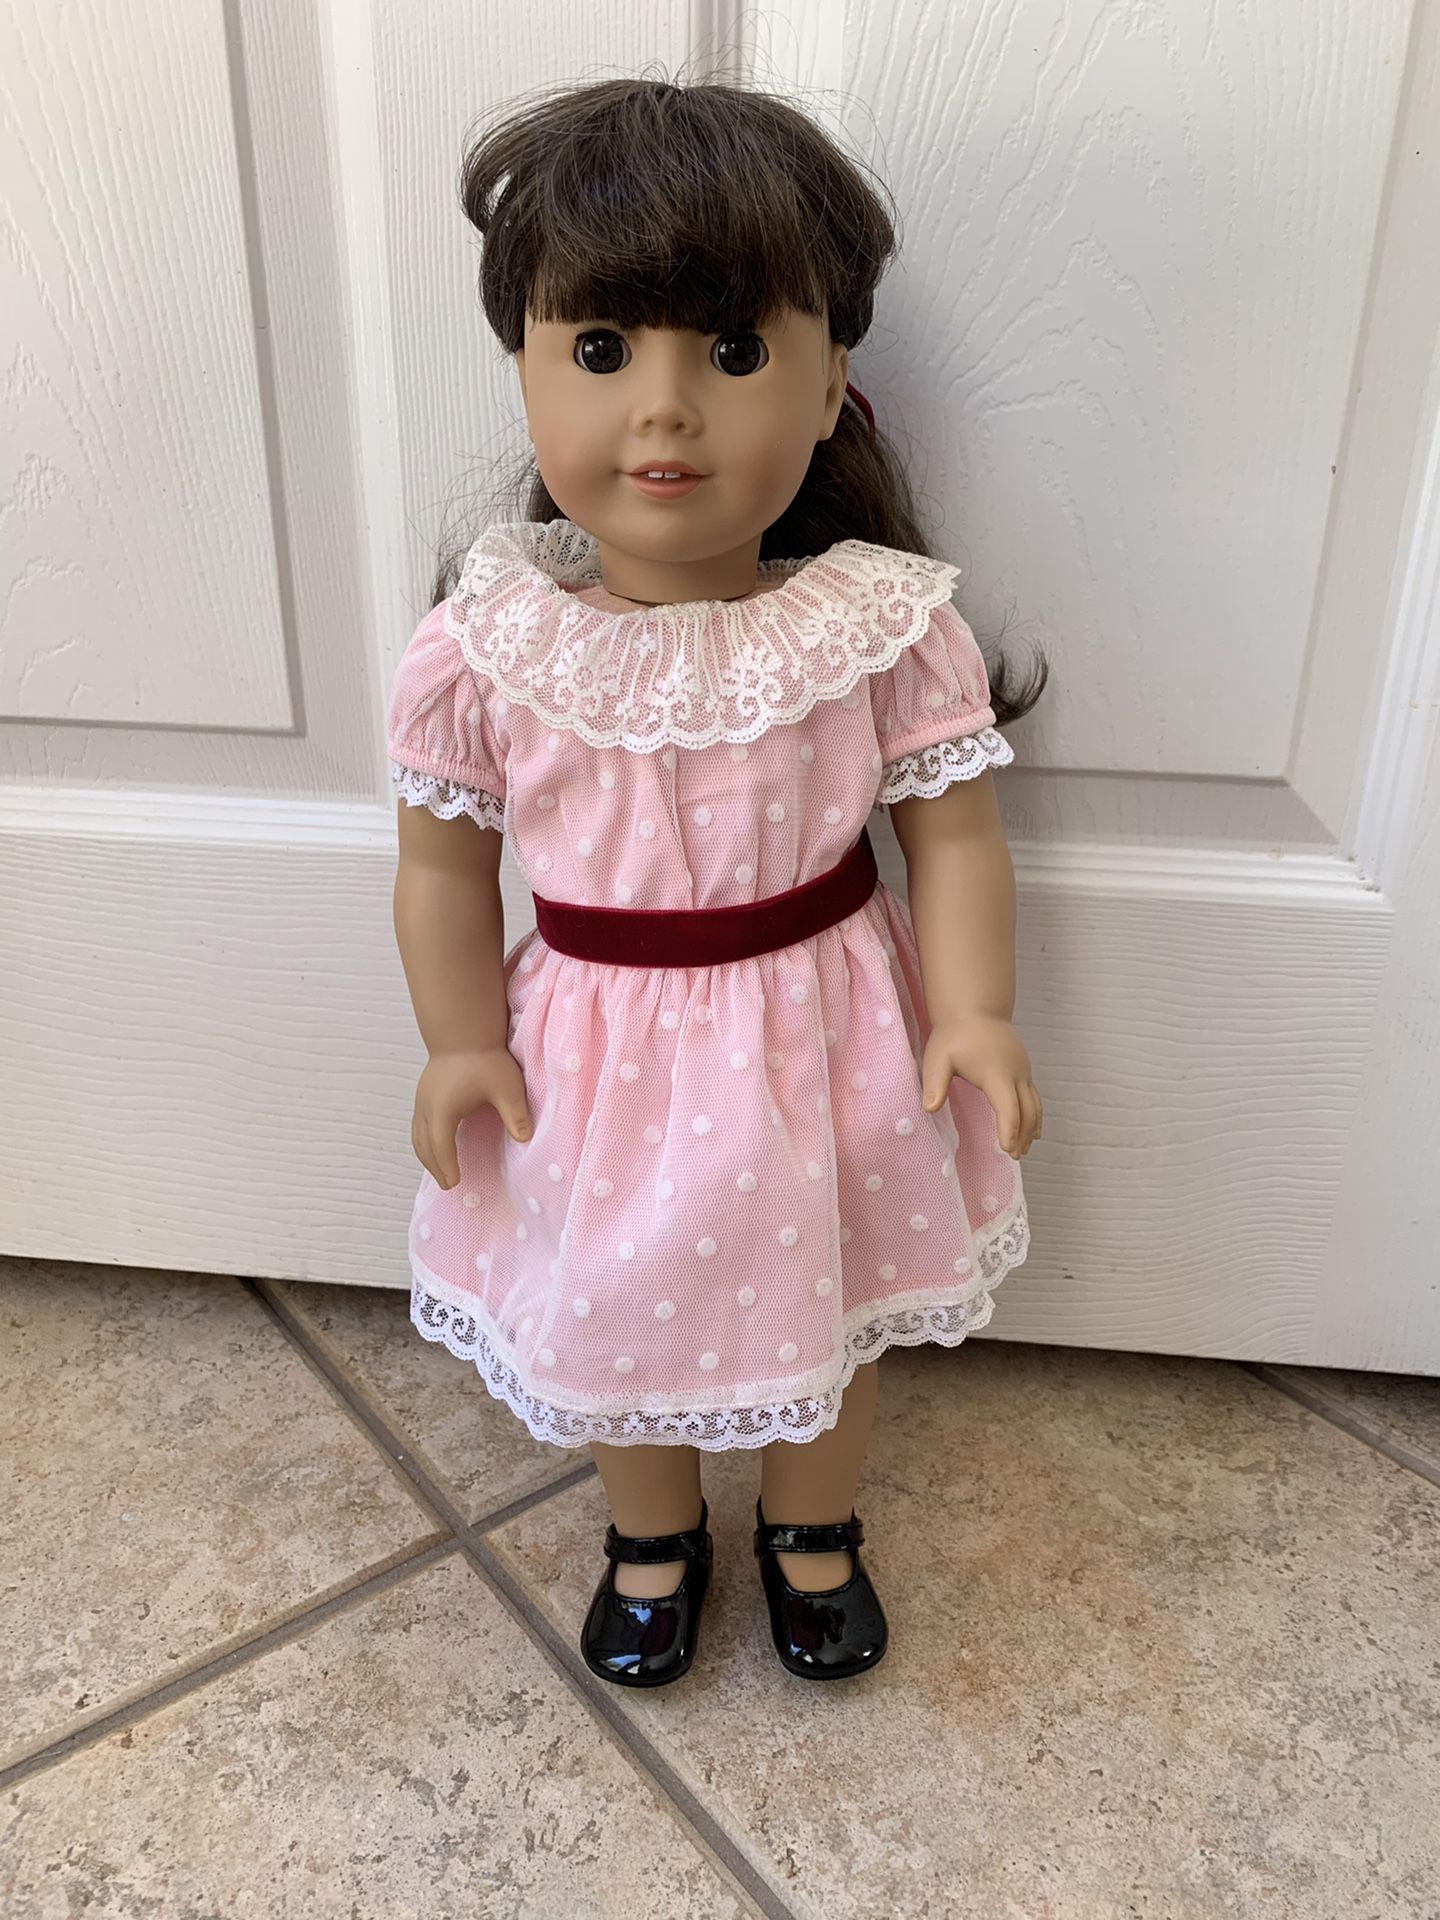 American girl doll Samantha